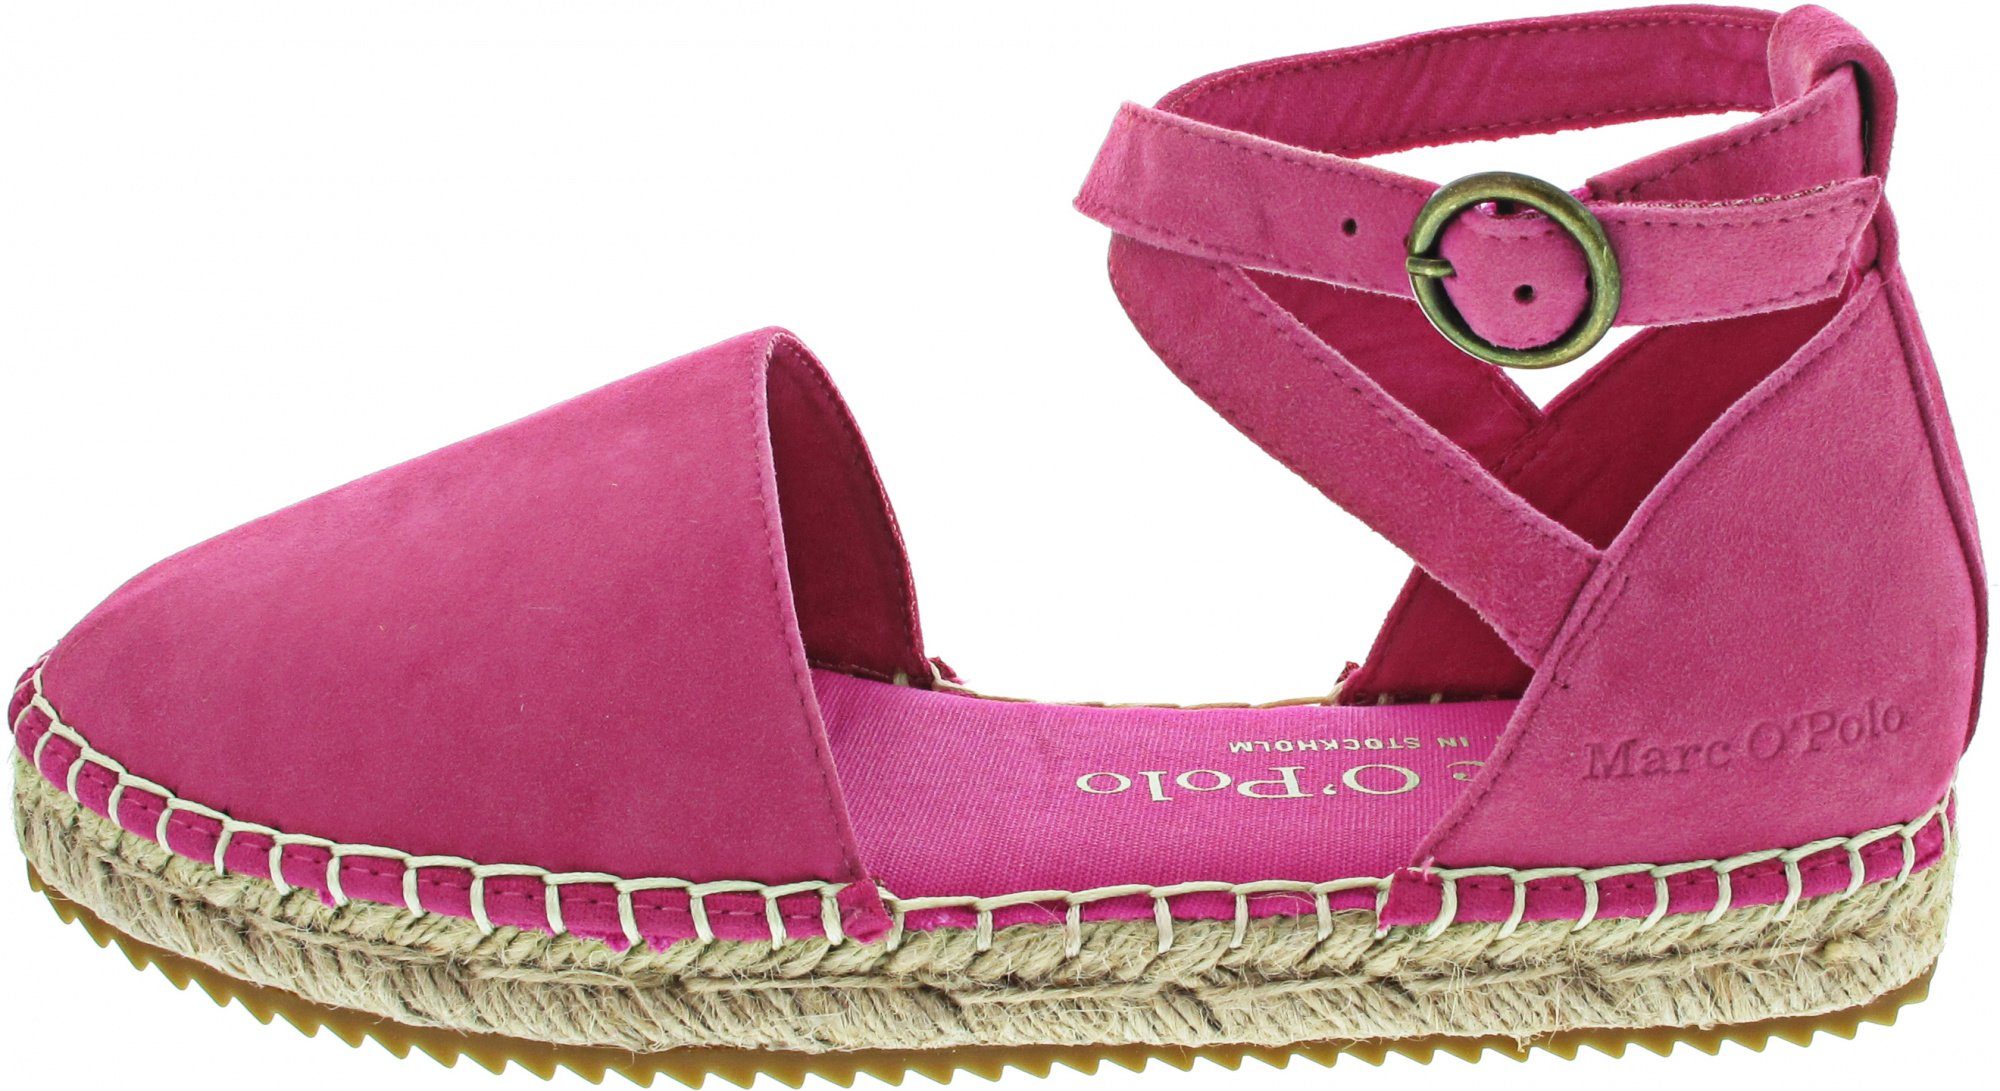 Marc O'Polo Espandrilles Sandal Sandalette Pink